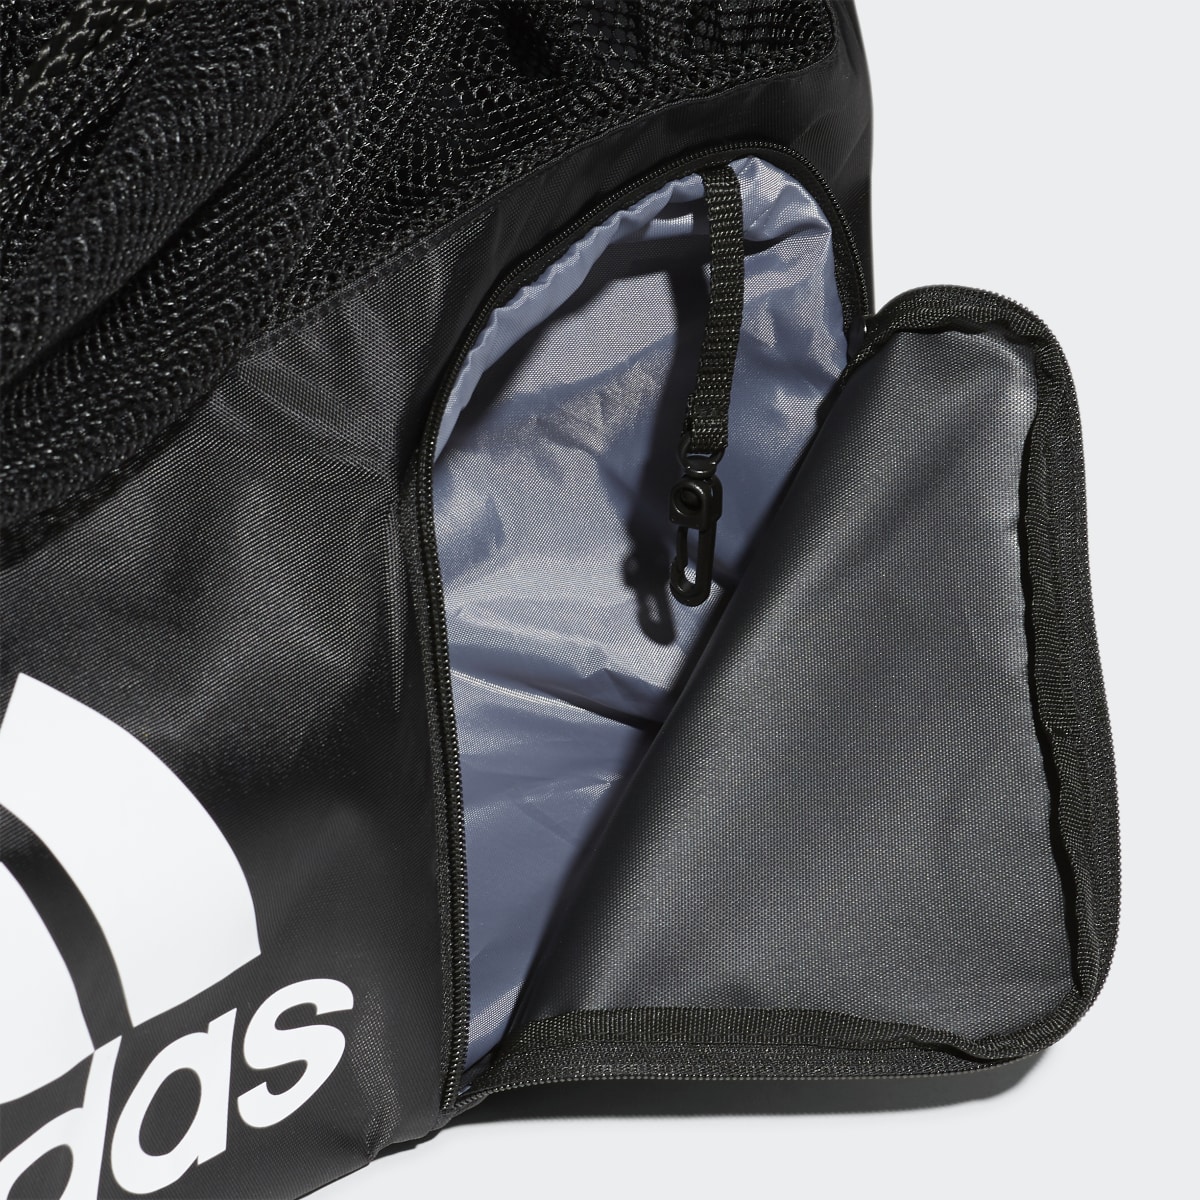 Adidas Stadium Ball Bag. 6